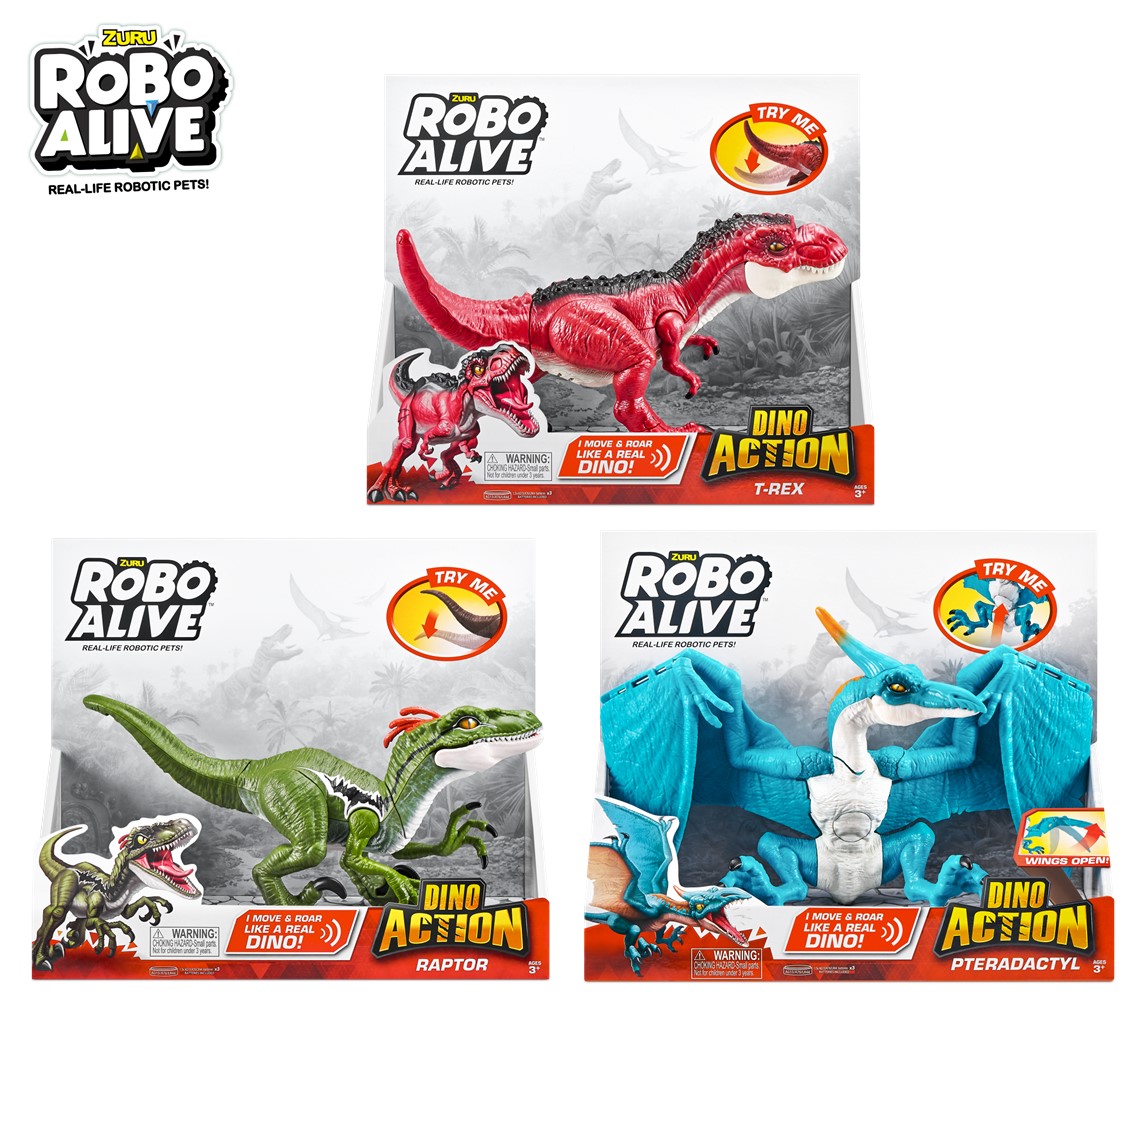 Robo Alive Dino Action Raptor by ZURU [with dino sound & action]